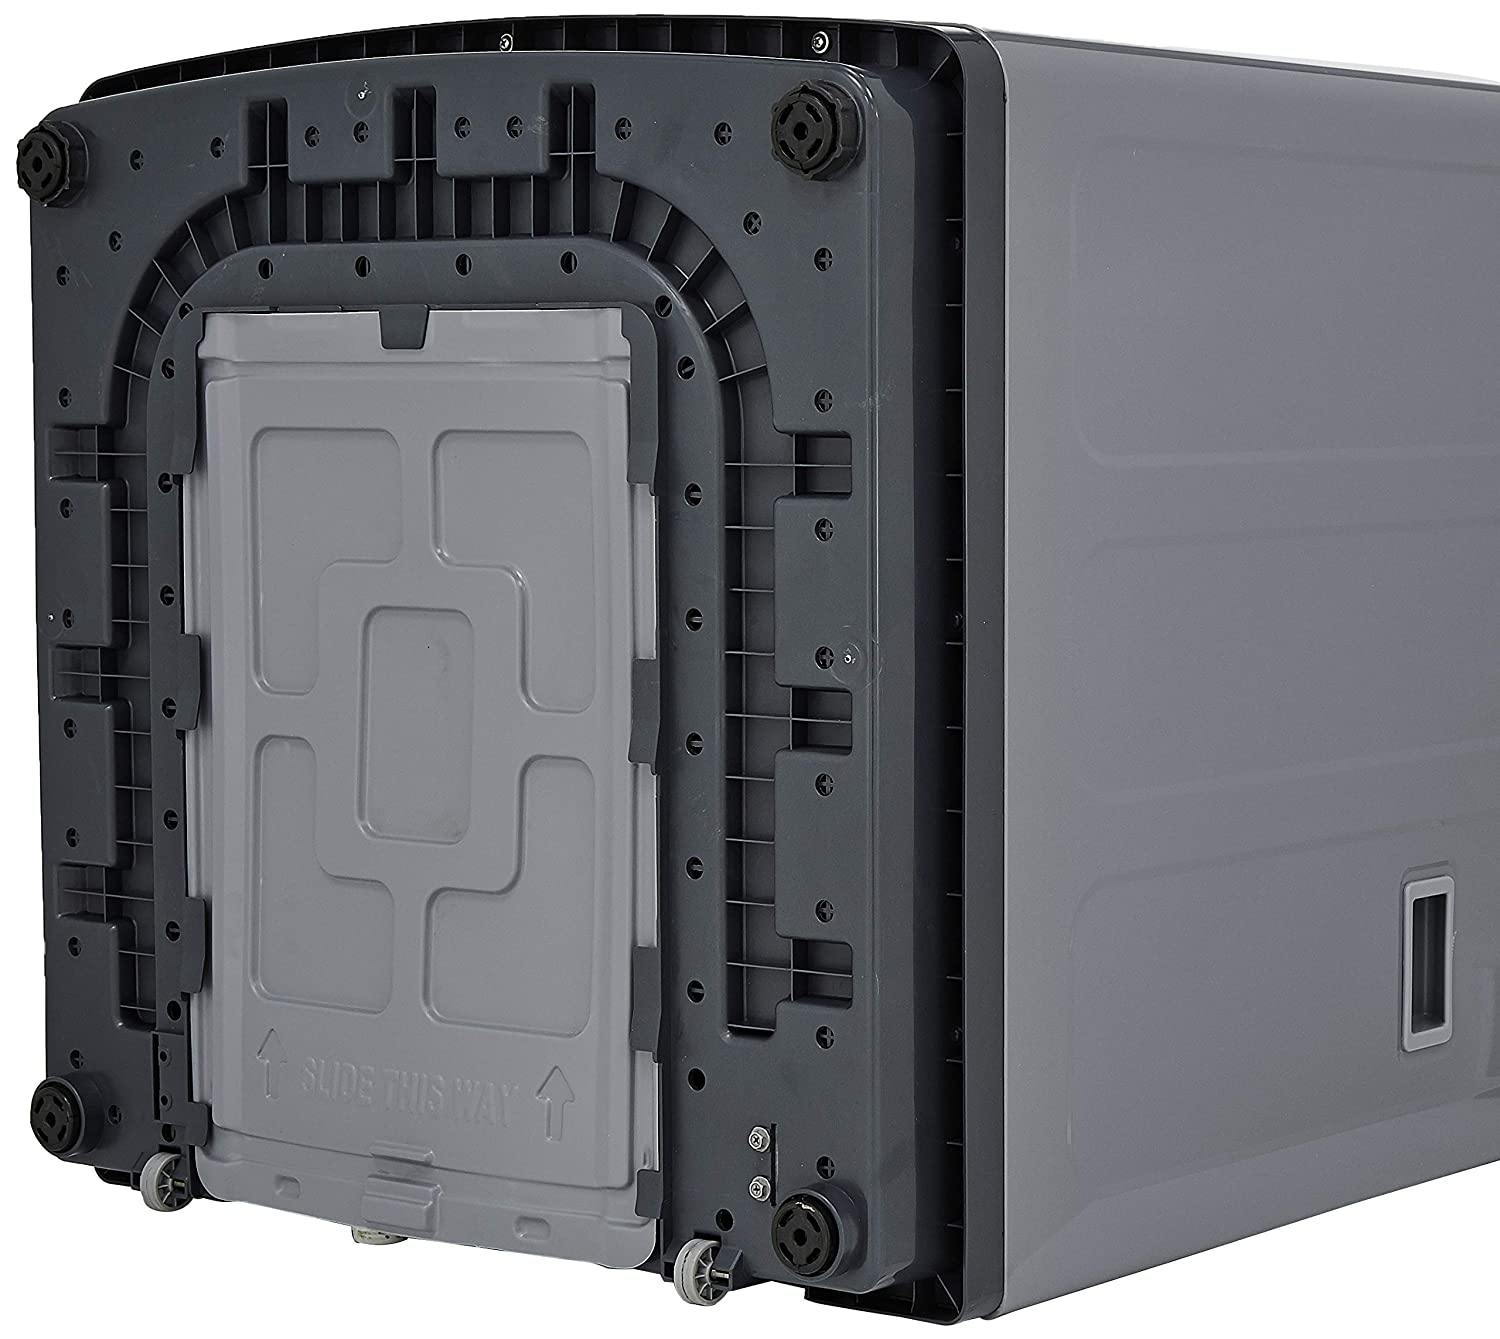 IFB 8.5 Kg Fully-Automatic Top Loading Washing Machine (TL-SSBL 8.5KG AQUA, Sparkle Silver) - Mahajan Electronics Online